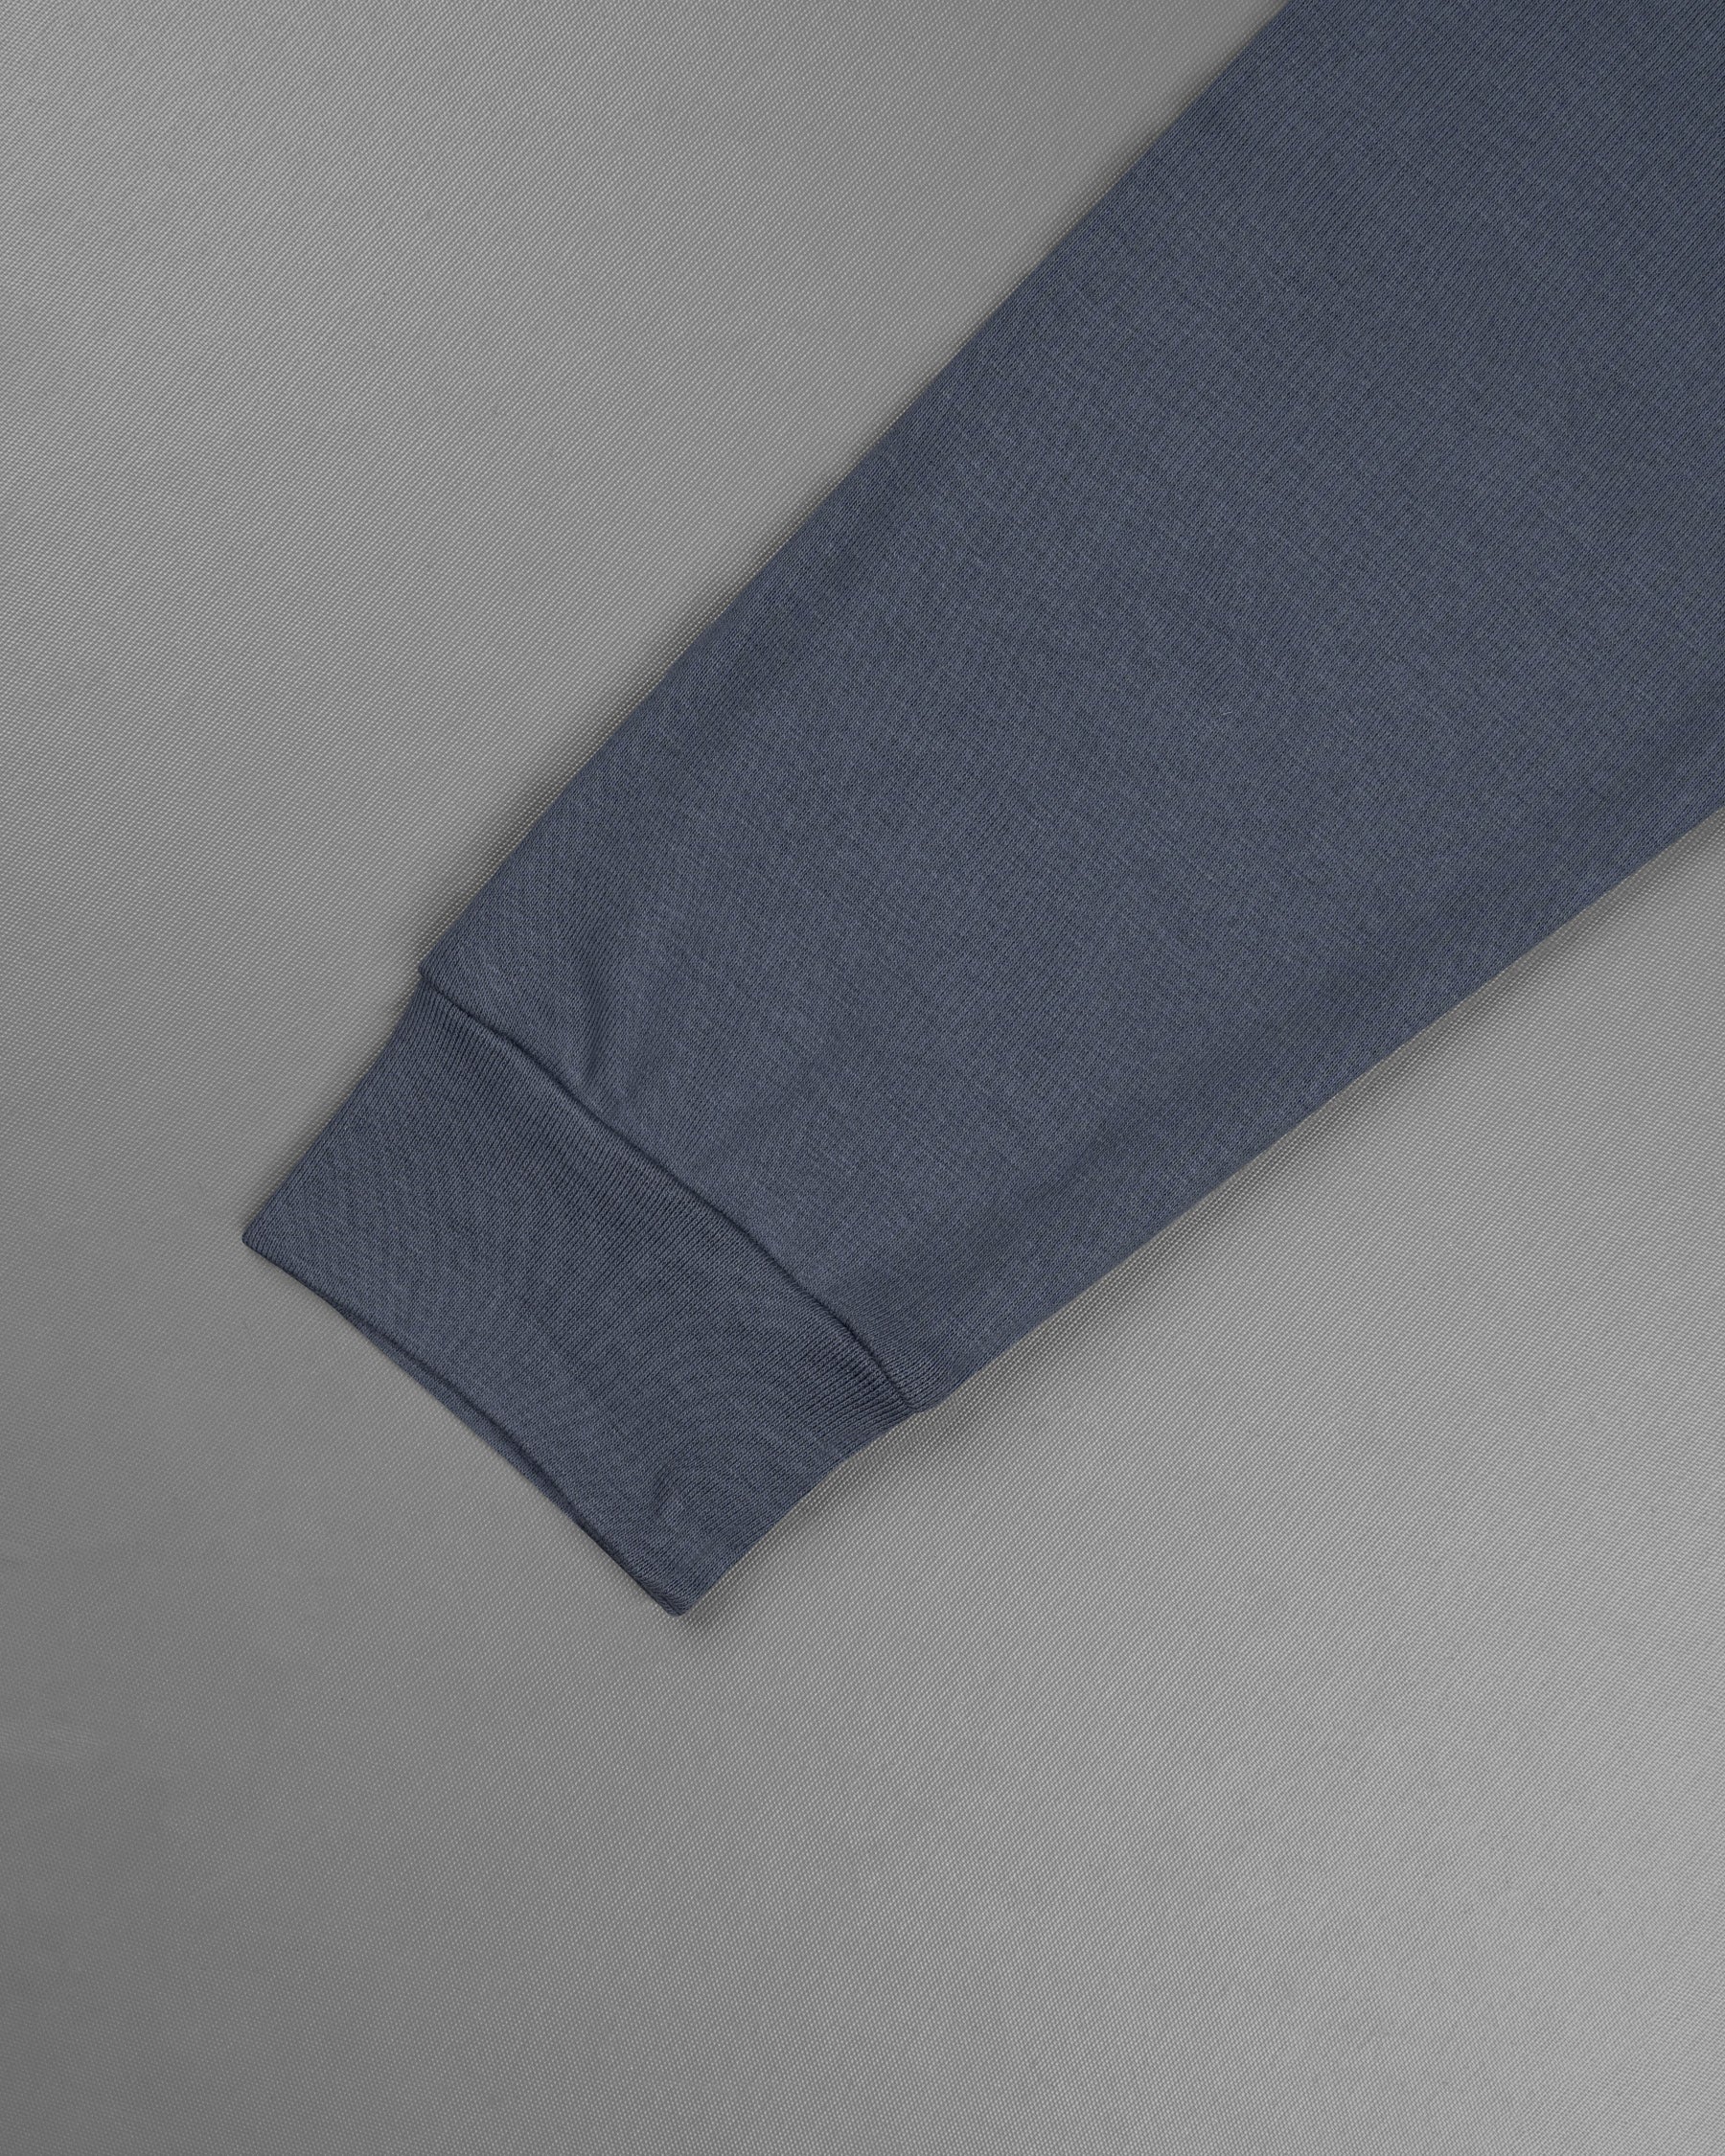 Scarpa Flow and Beauty Bush Full Sleeve Premium Cotton Jersey Sweatshirt TS503-S, TS503-M, TS503-L, TS503-XL, TS503-XXL